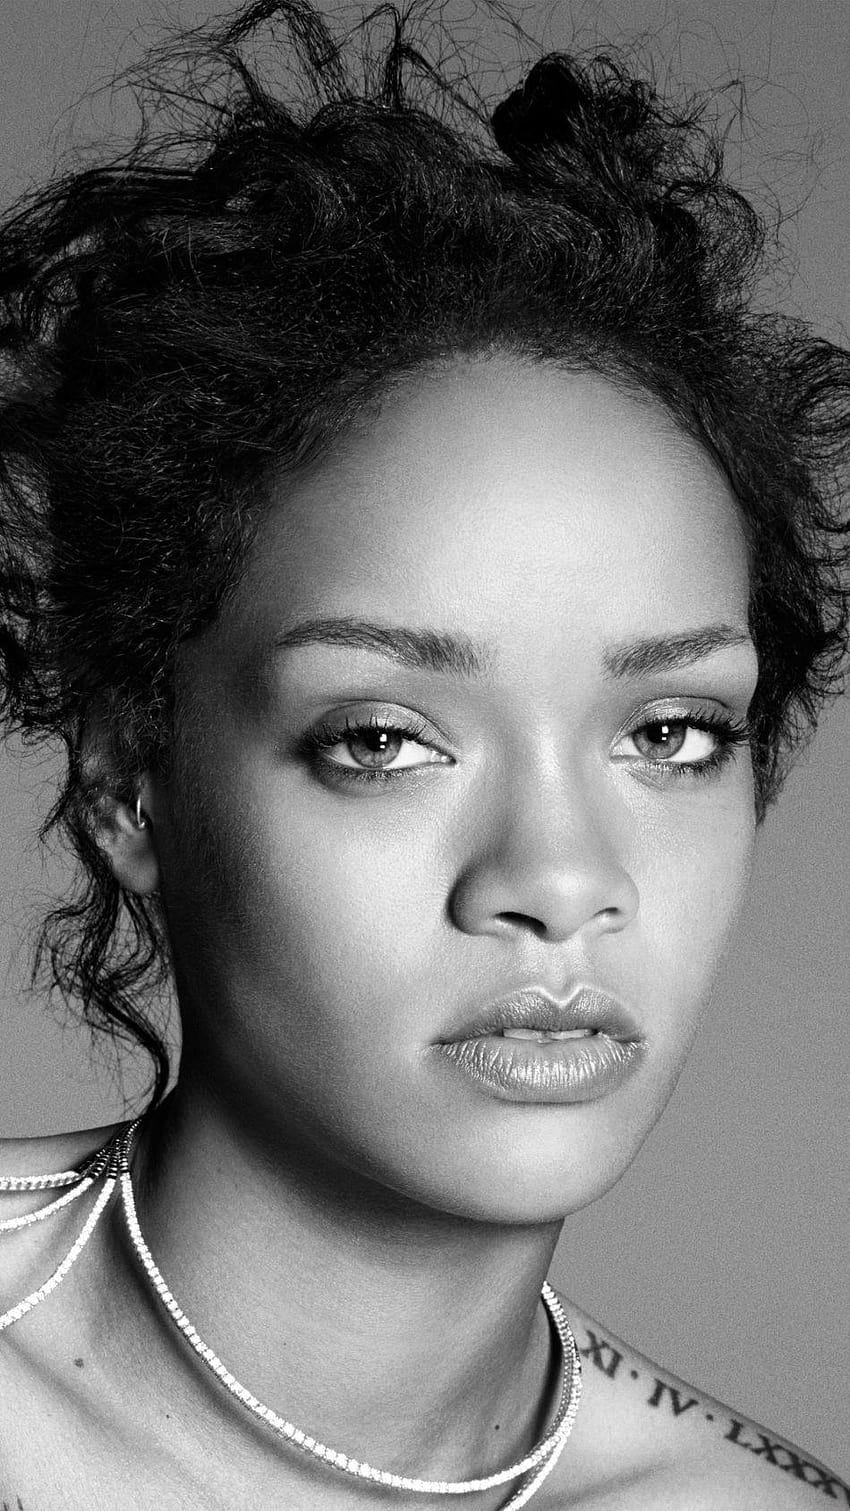 3840x2160px, 4K Free download | Rihanna Monochrome 2018 Pure Ultra ...